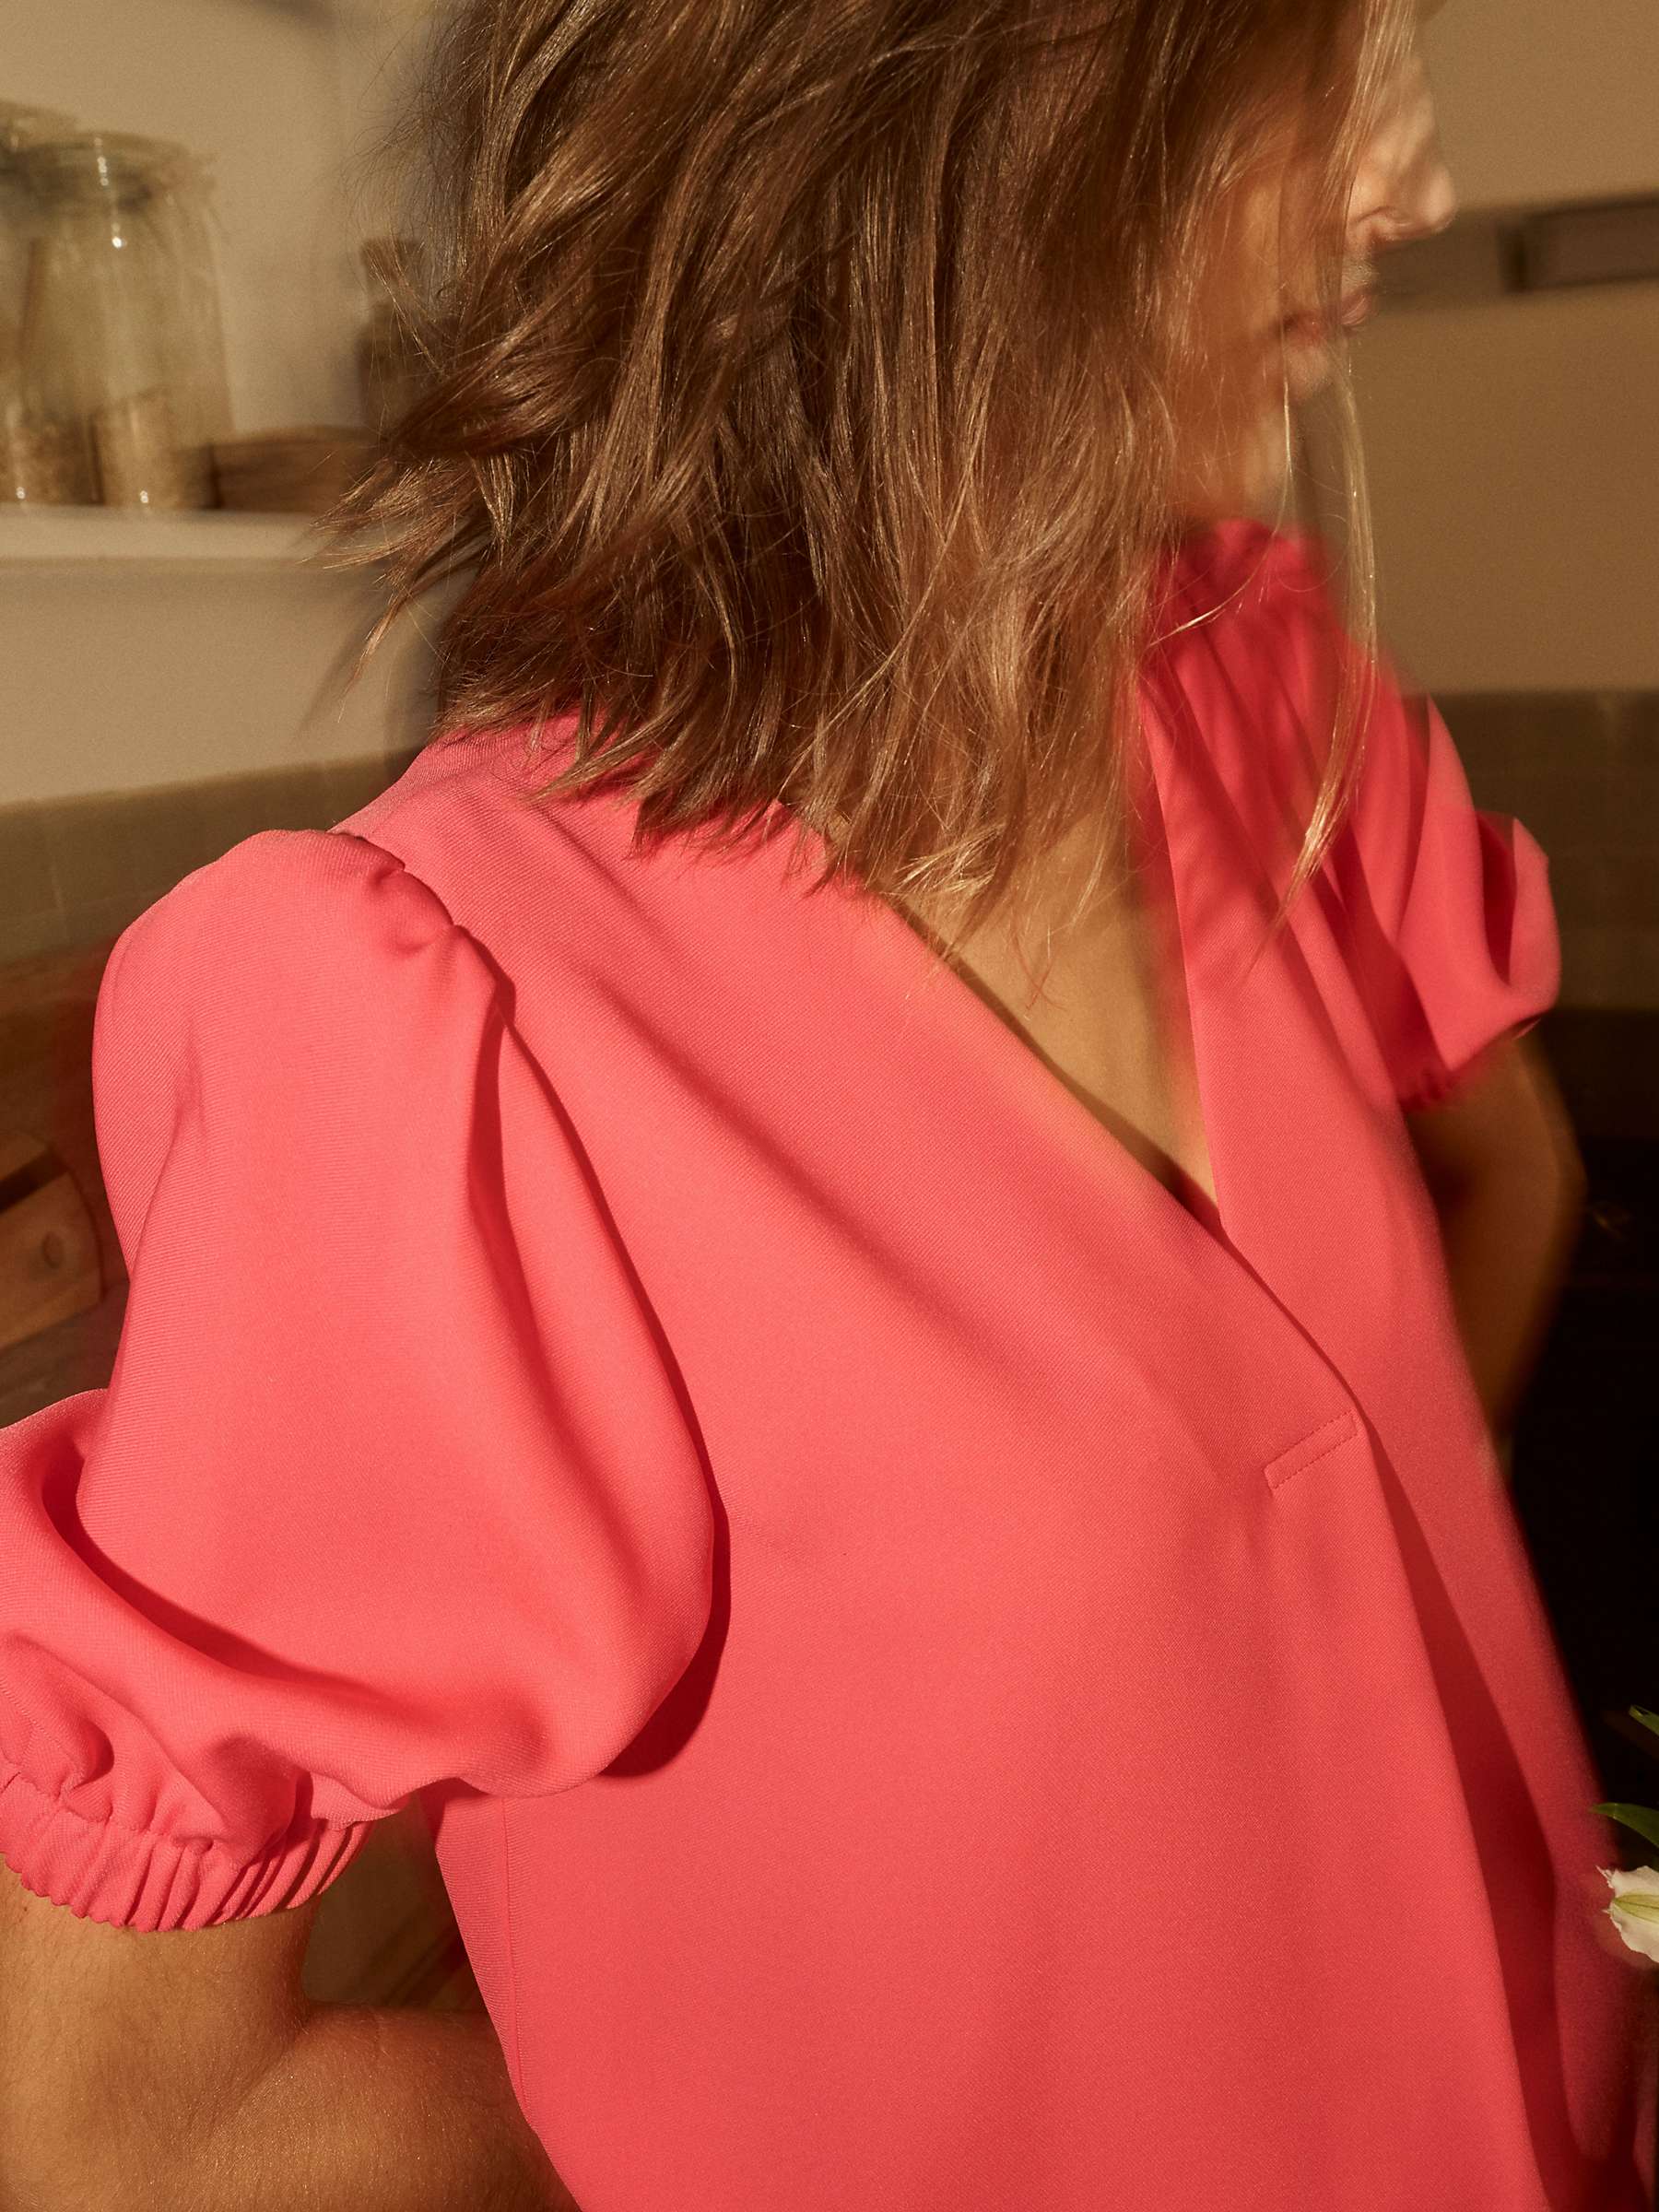 Buy MOS MOSH Women's Maeve Leia Short Sleeve Dress, Pink Online at johnlewis.com